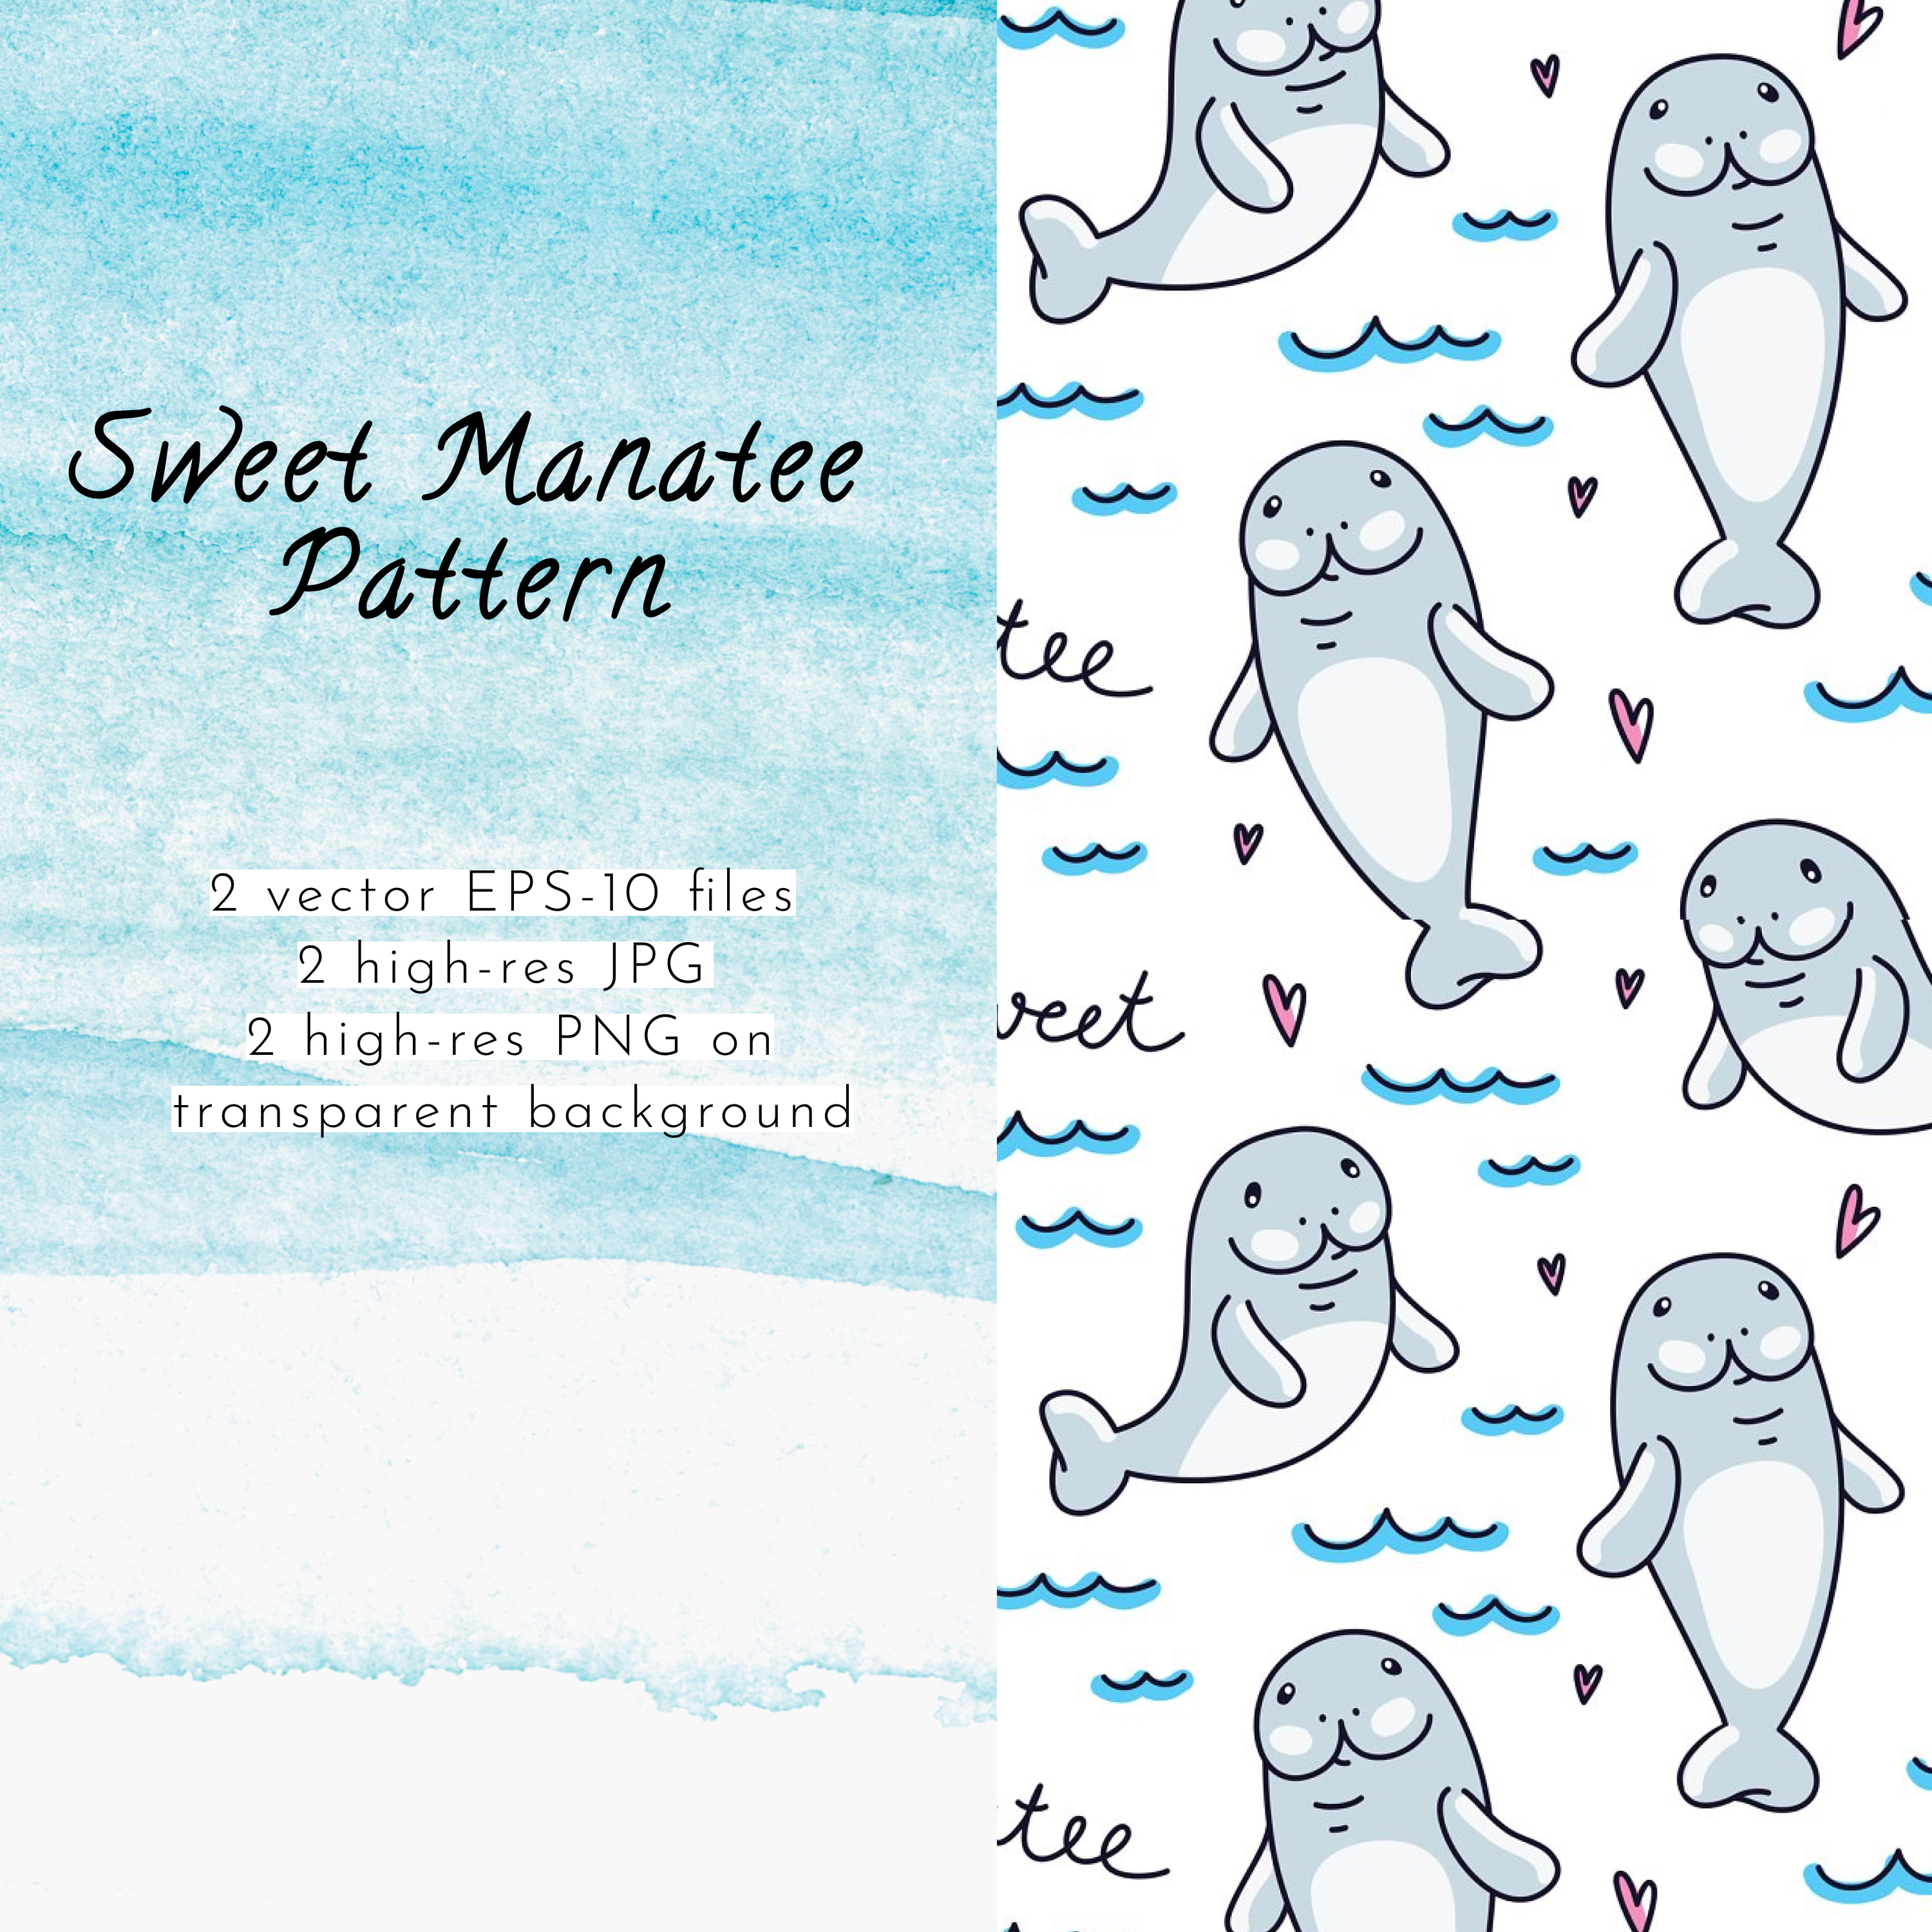 Sweet Manatee Pattern.